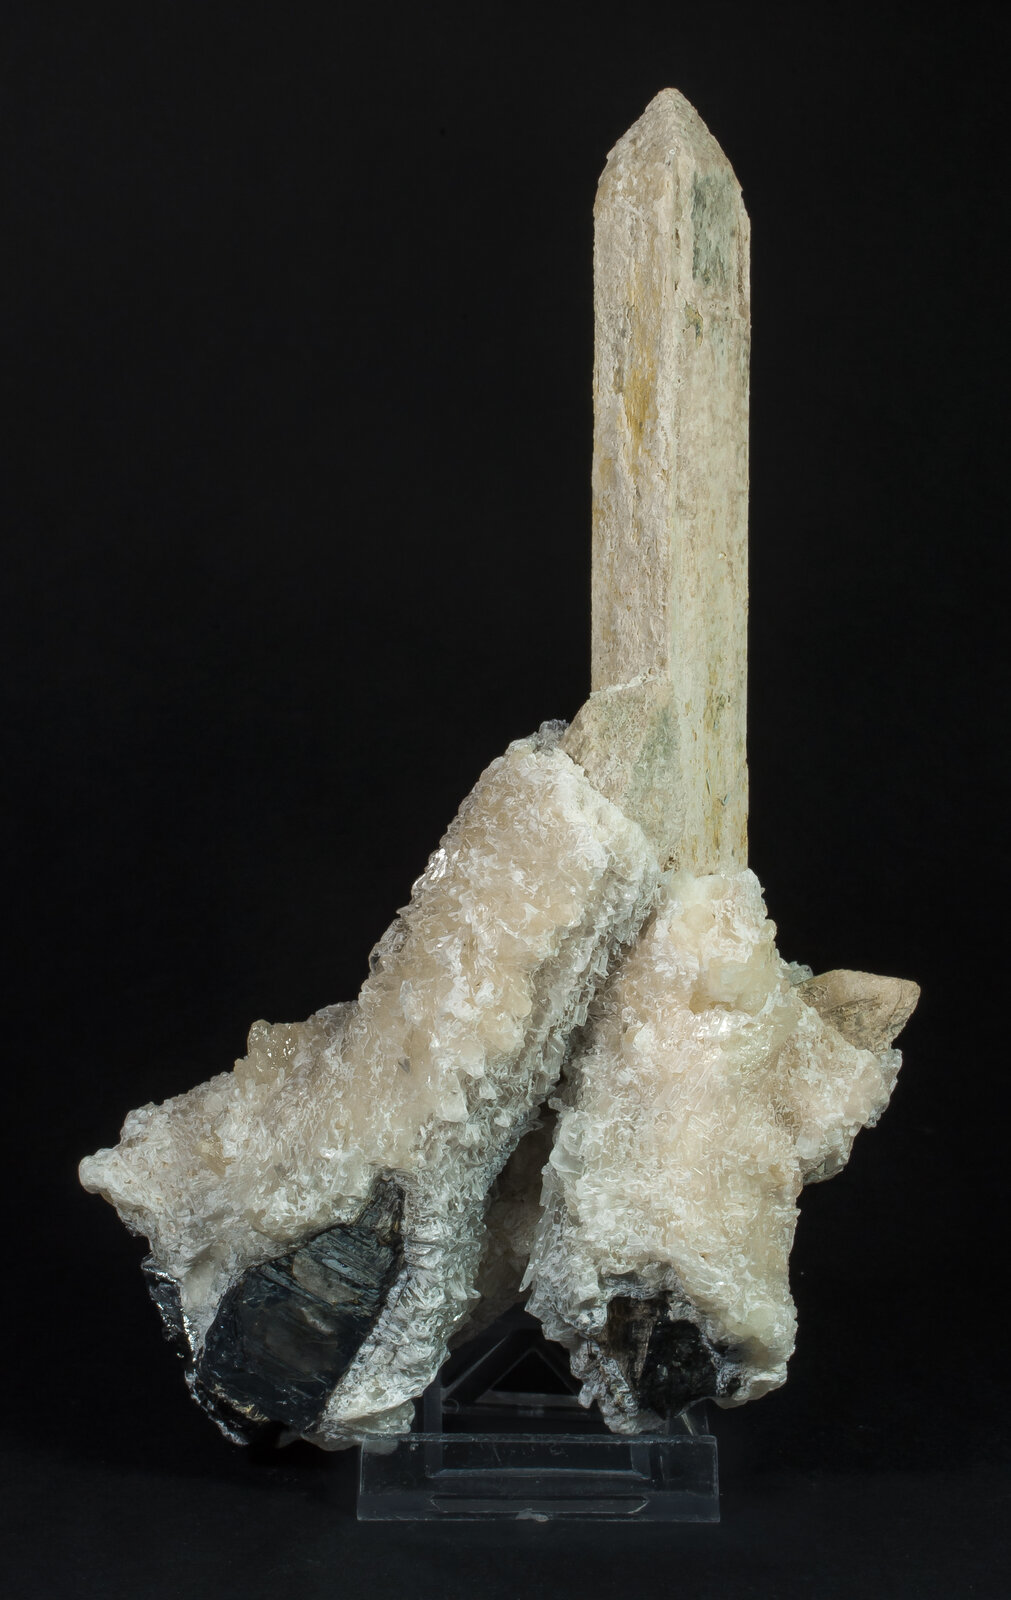 specimens/s_imagesAO8/Stibiconite-TFR1AO8r.jpg